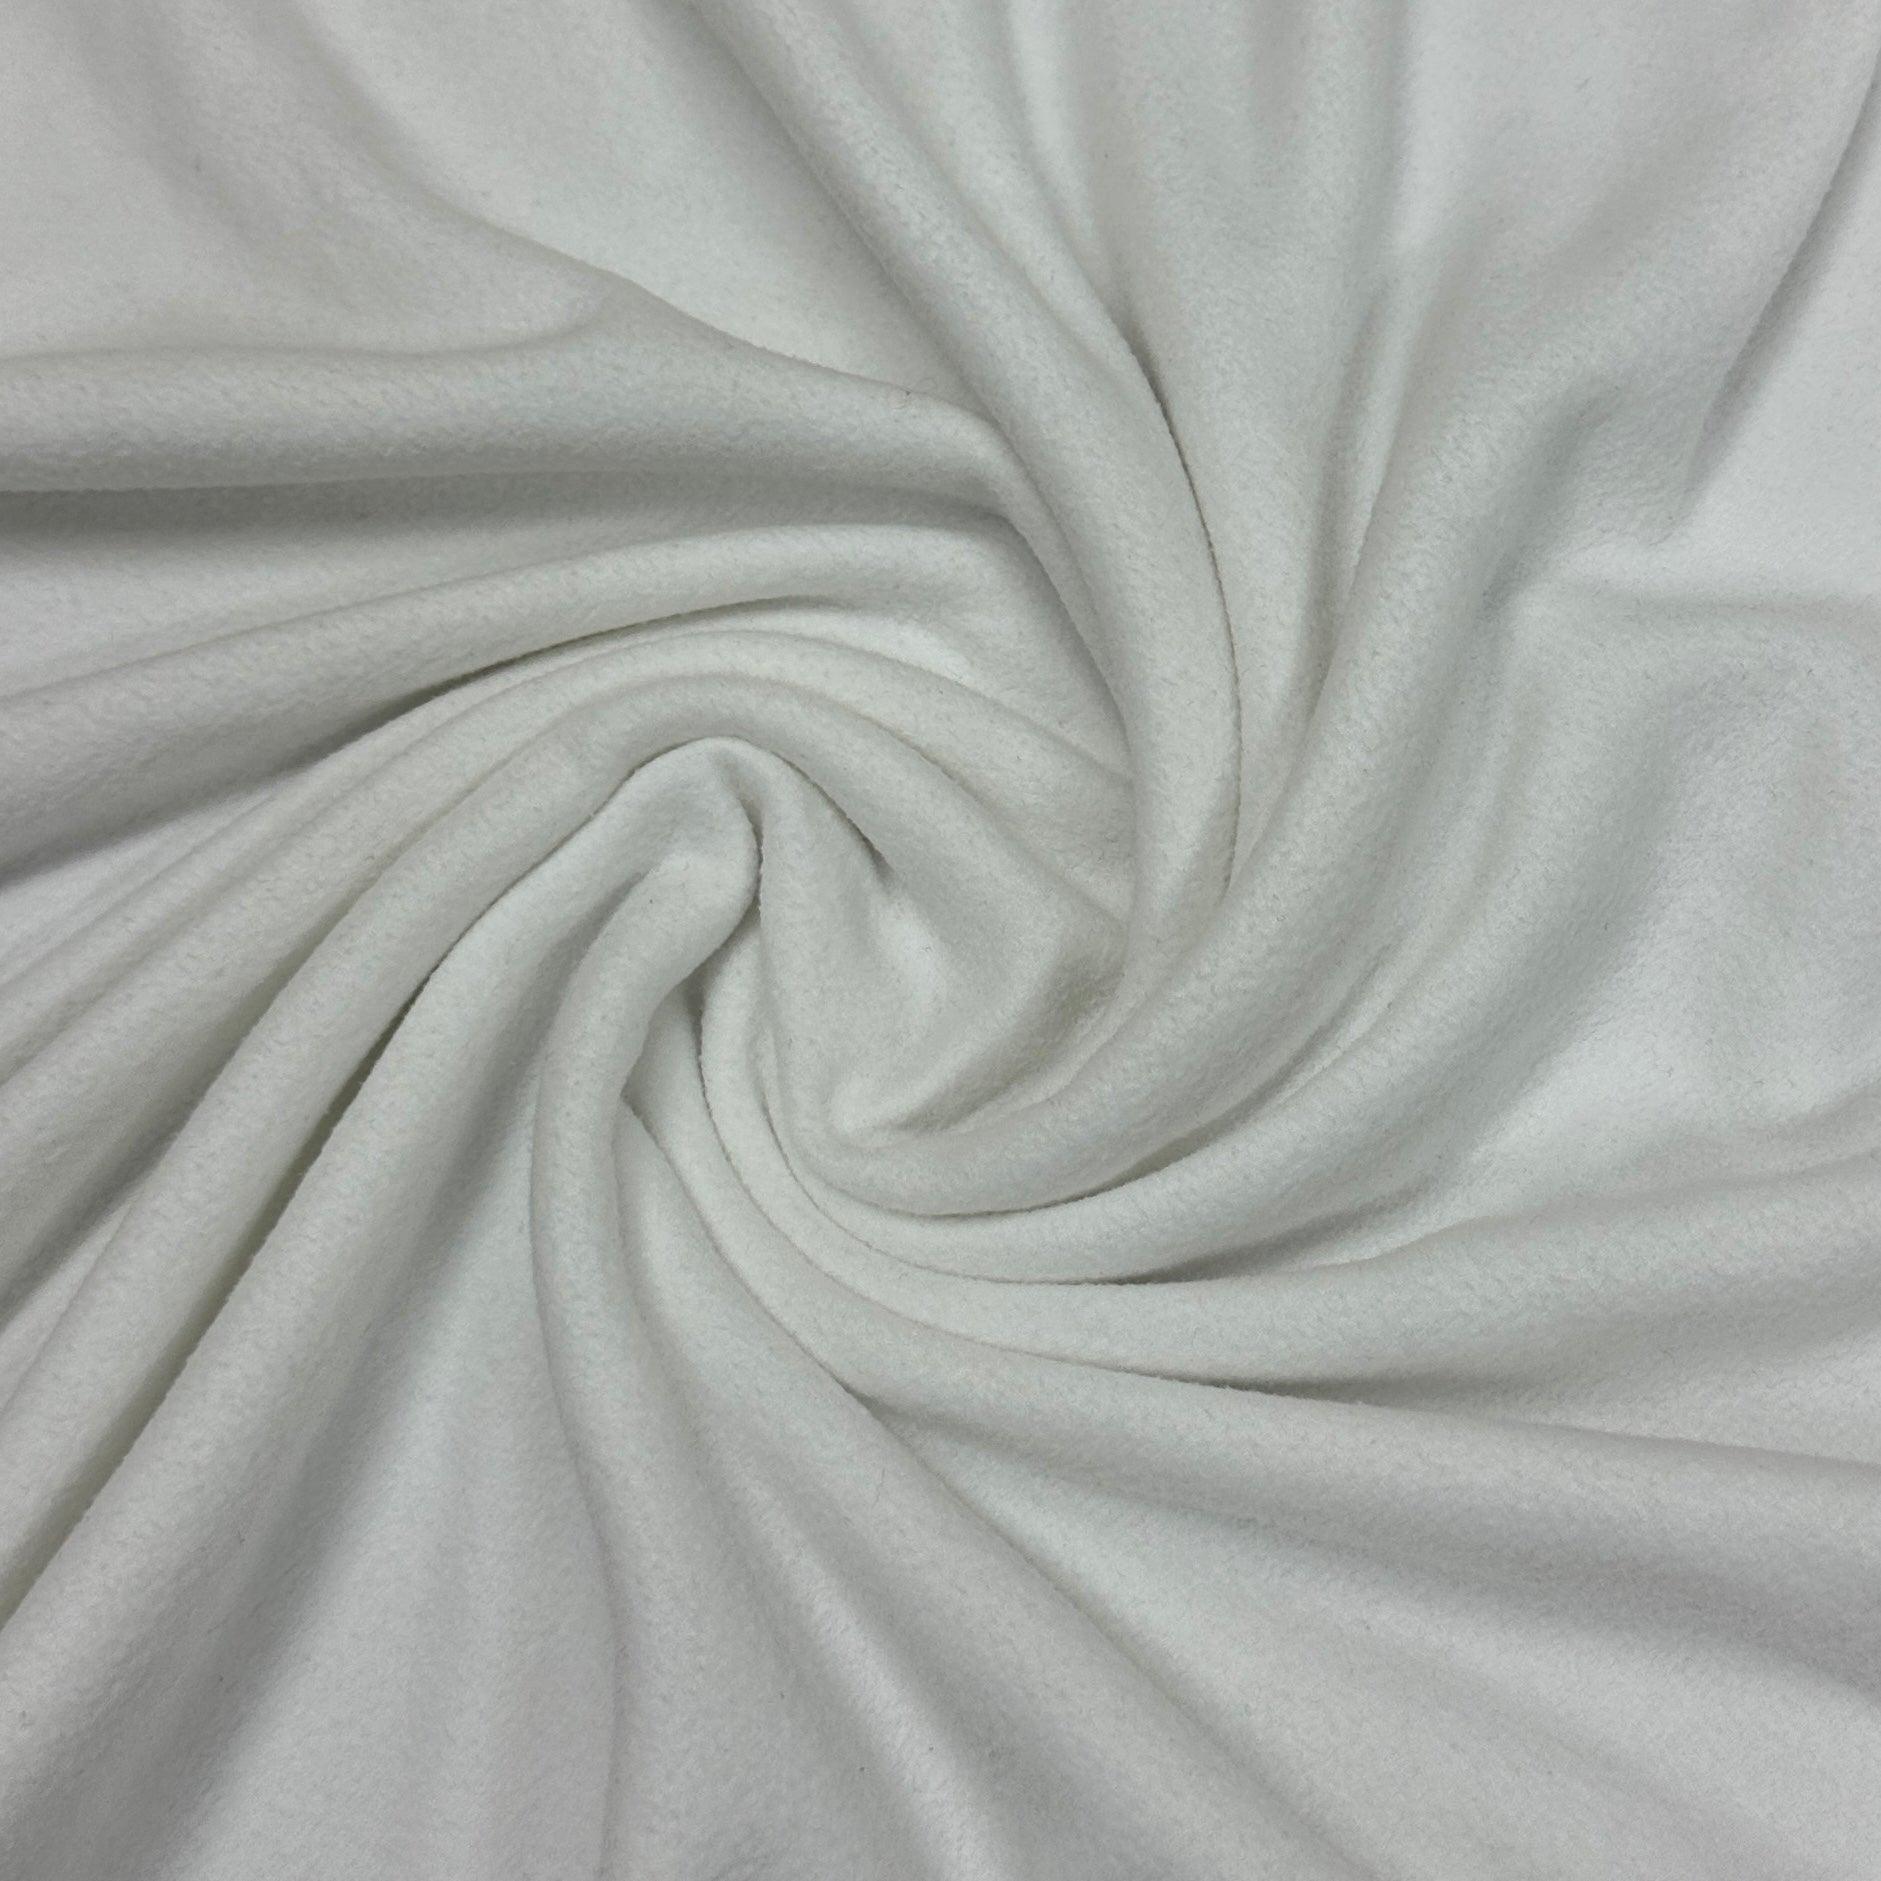 White Microfleece Fabric - 180 GSM, $8.78 per yard, 15 yards - Nature's Fabrics